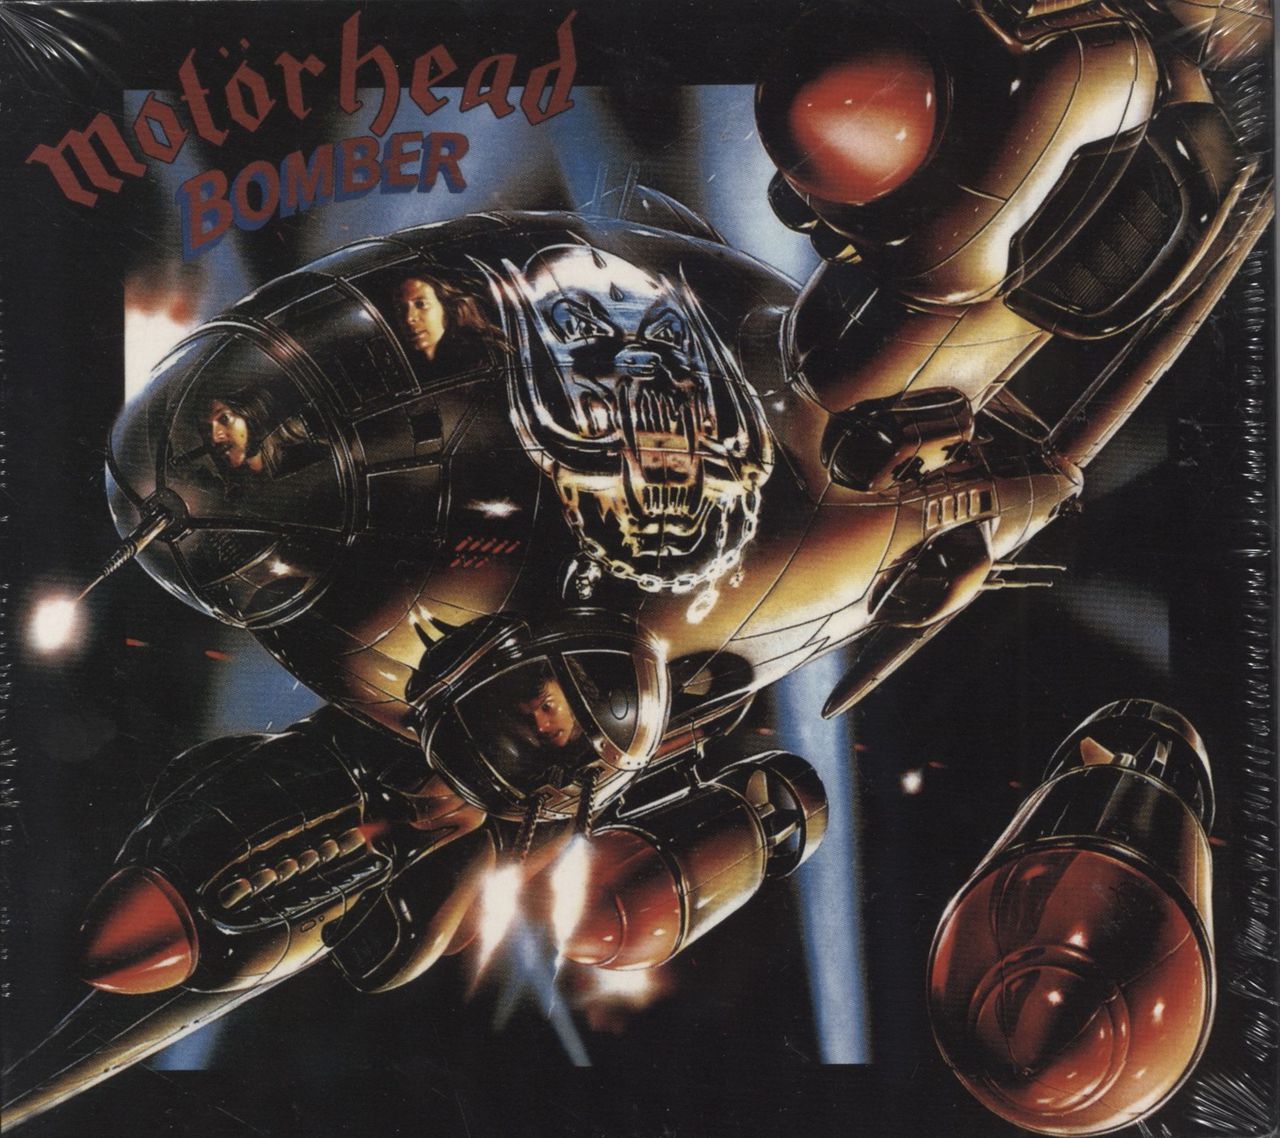 Motorhead Bomber - Deluxe Edition UK 2 CD album set (Double CD) 0602517855427